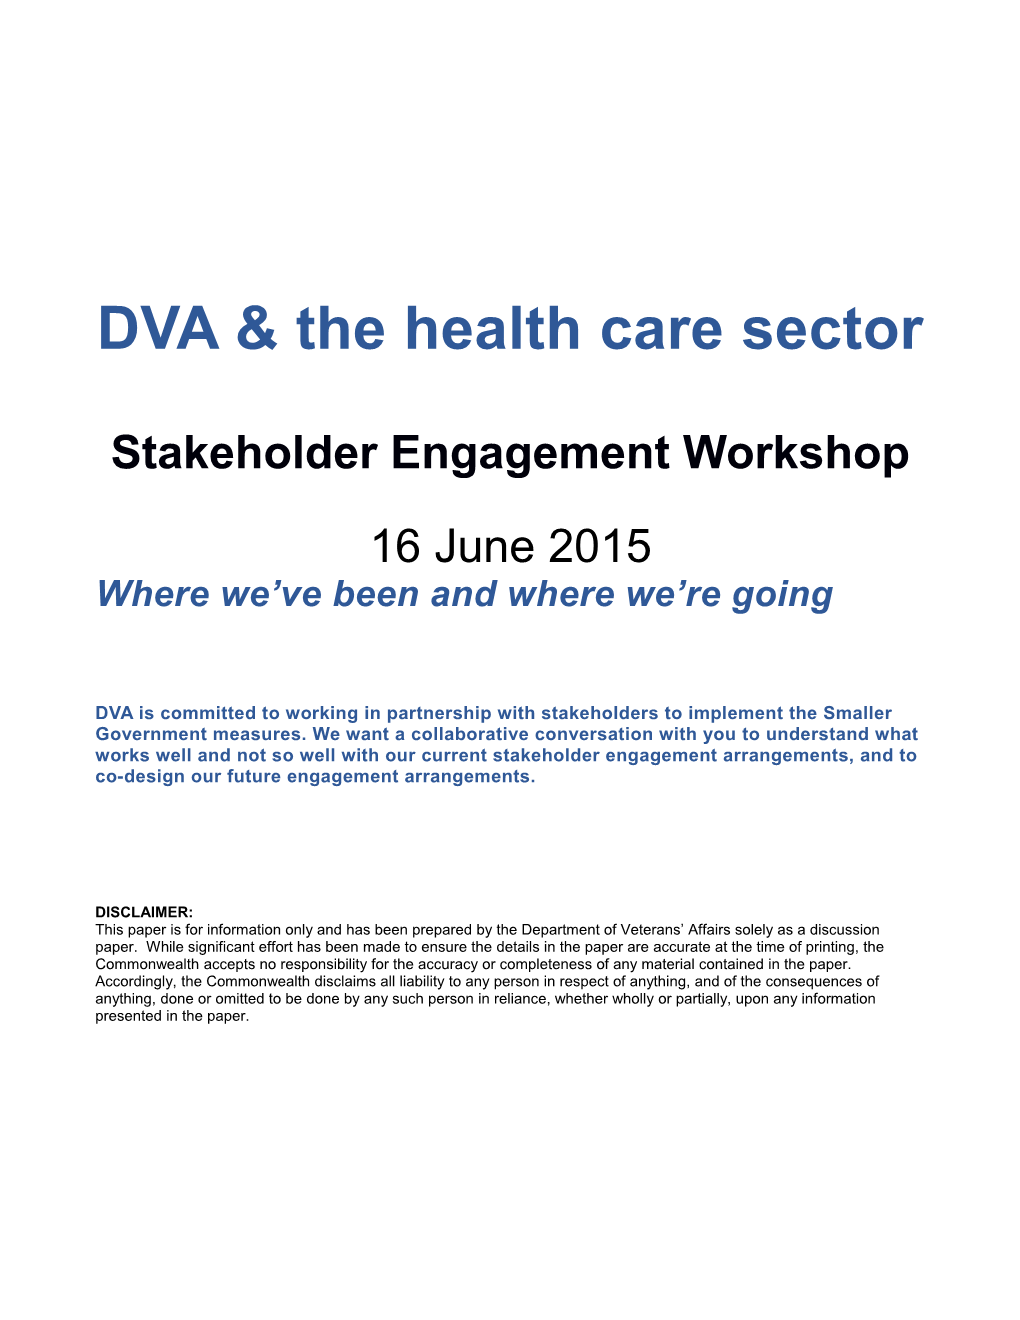 DVA & the Health Care Sector